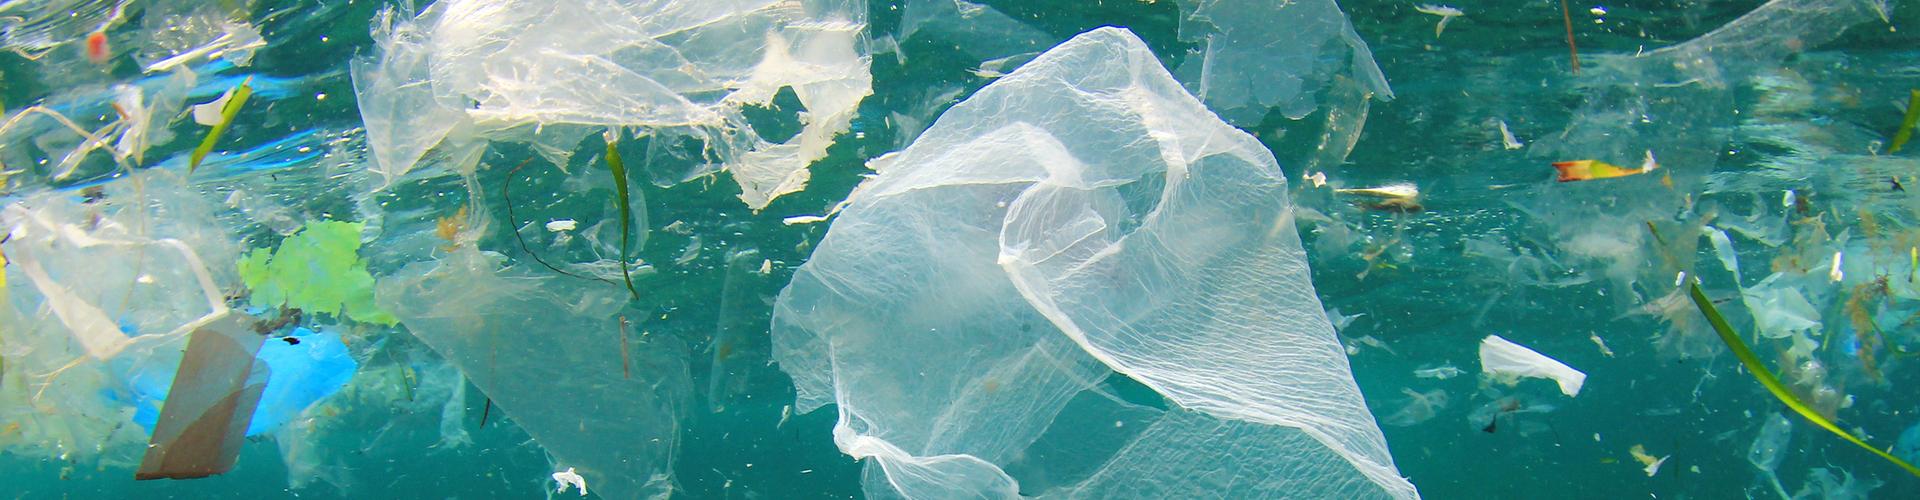 plastic bags floating in water